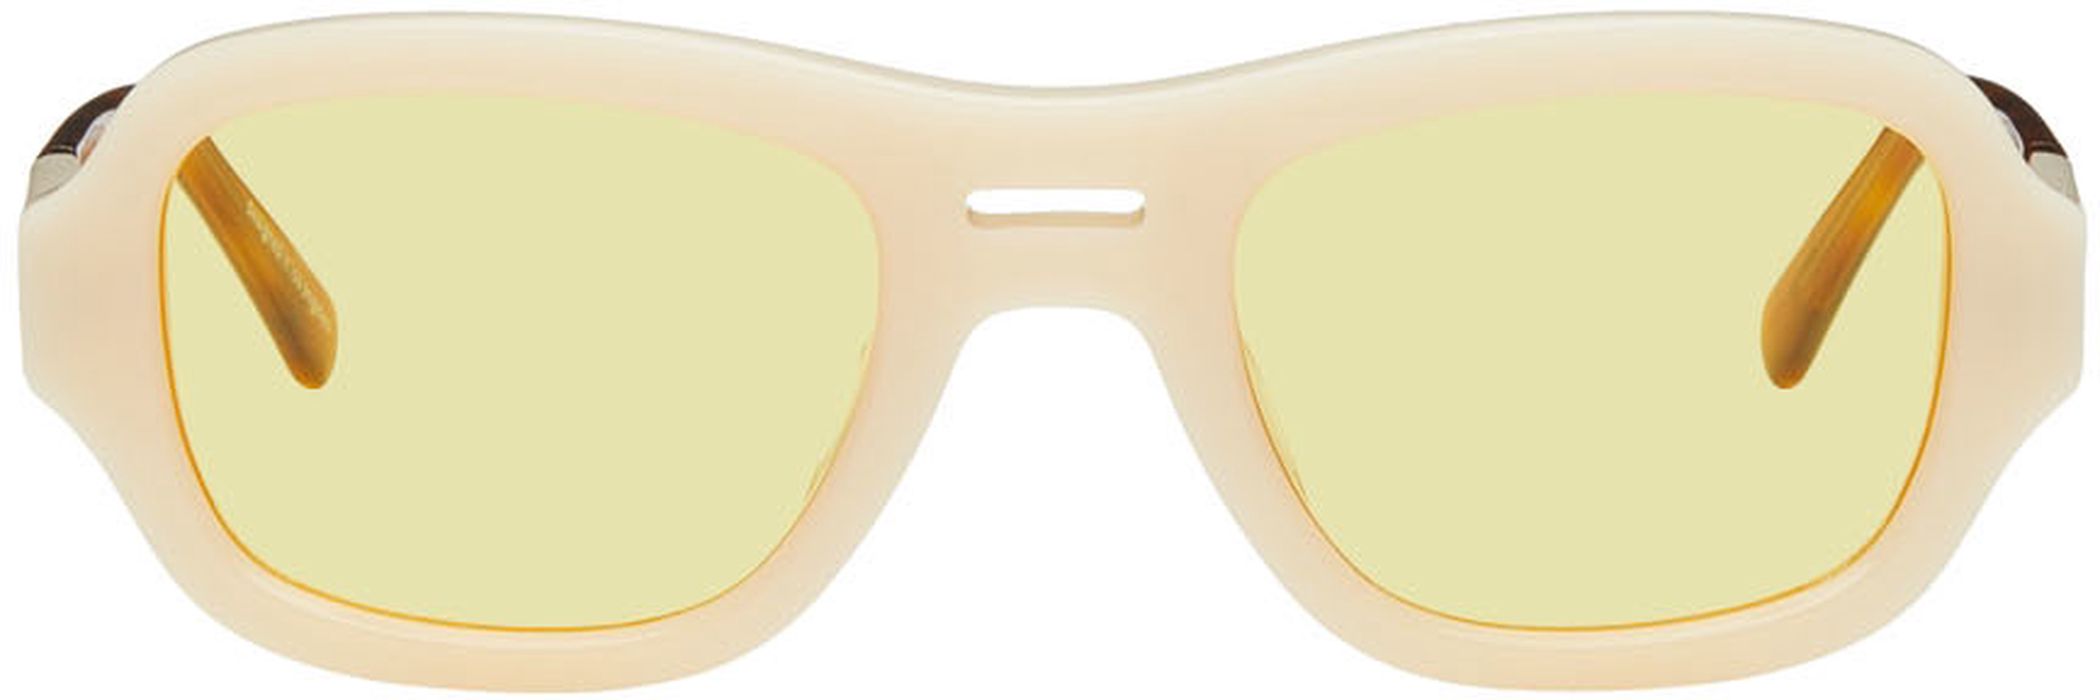 BONNIE CLYDE Beige & Yellow Maniac Sunglasses